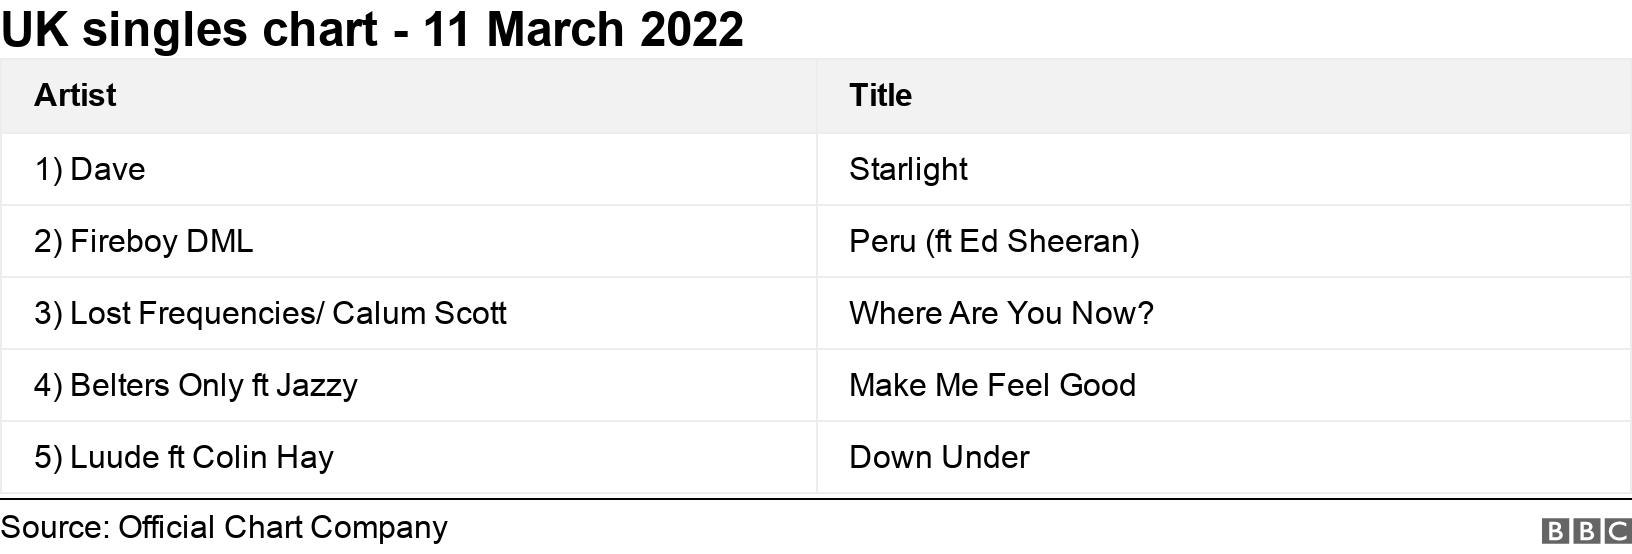 UK singles chart - 11 March 2022. . .